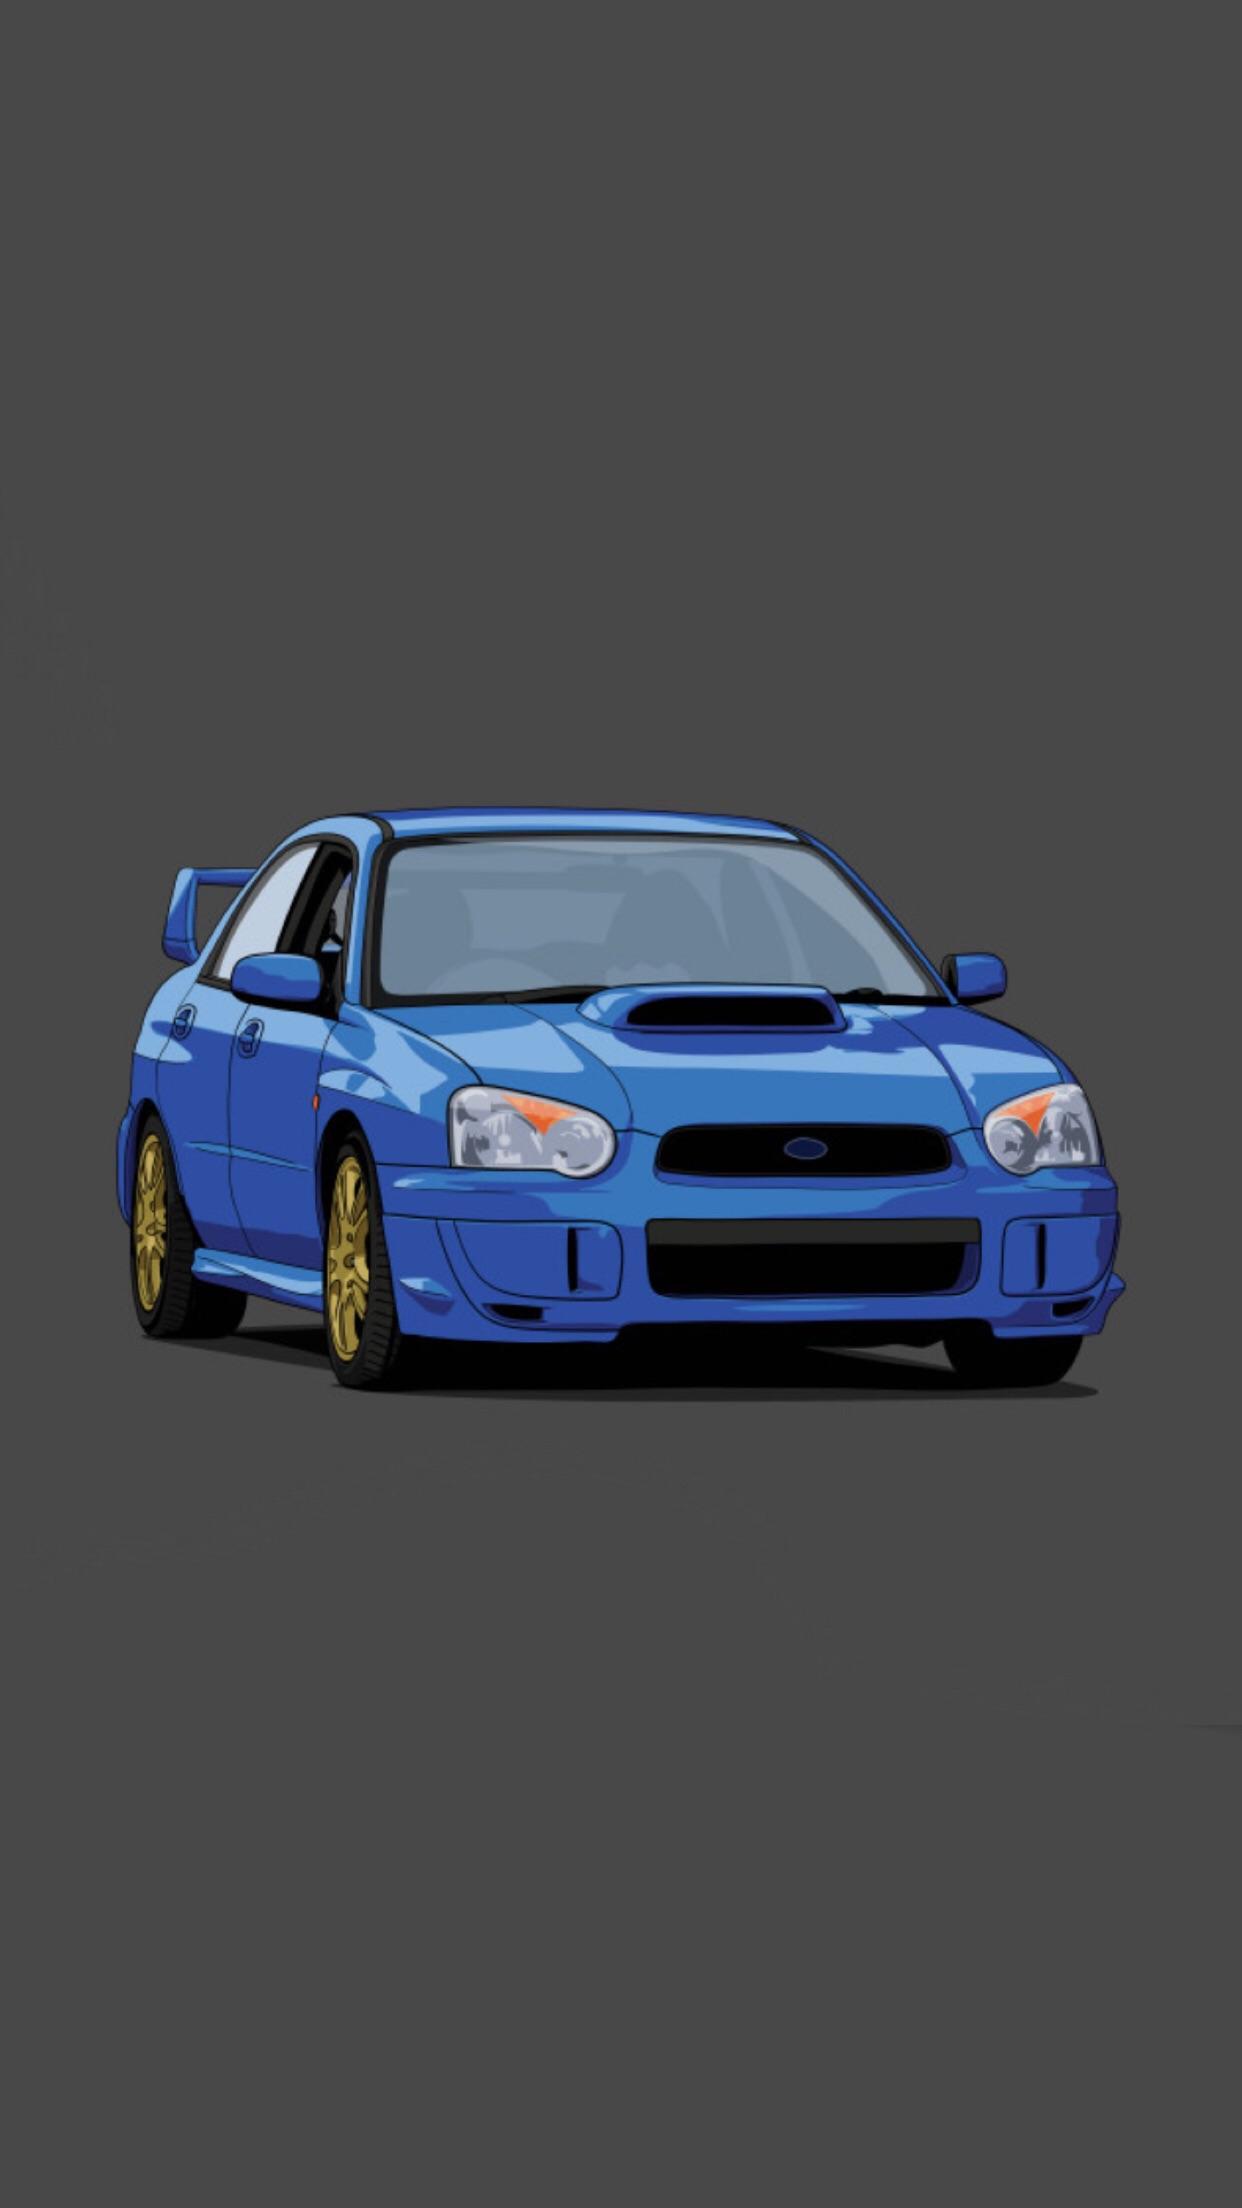 Subaru Wrx Sti iPhone Wallpaper